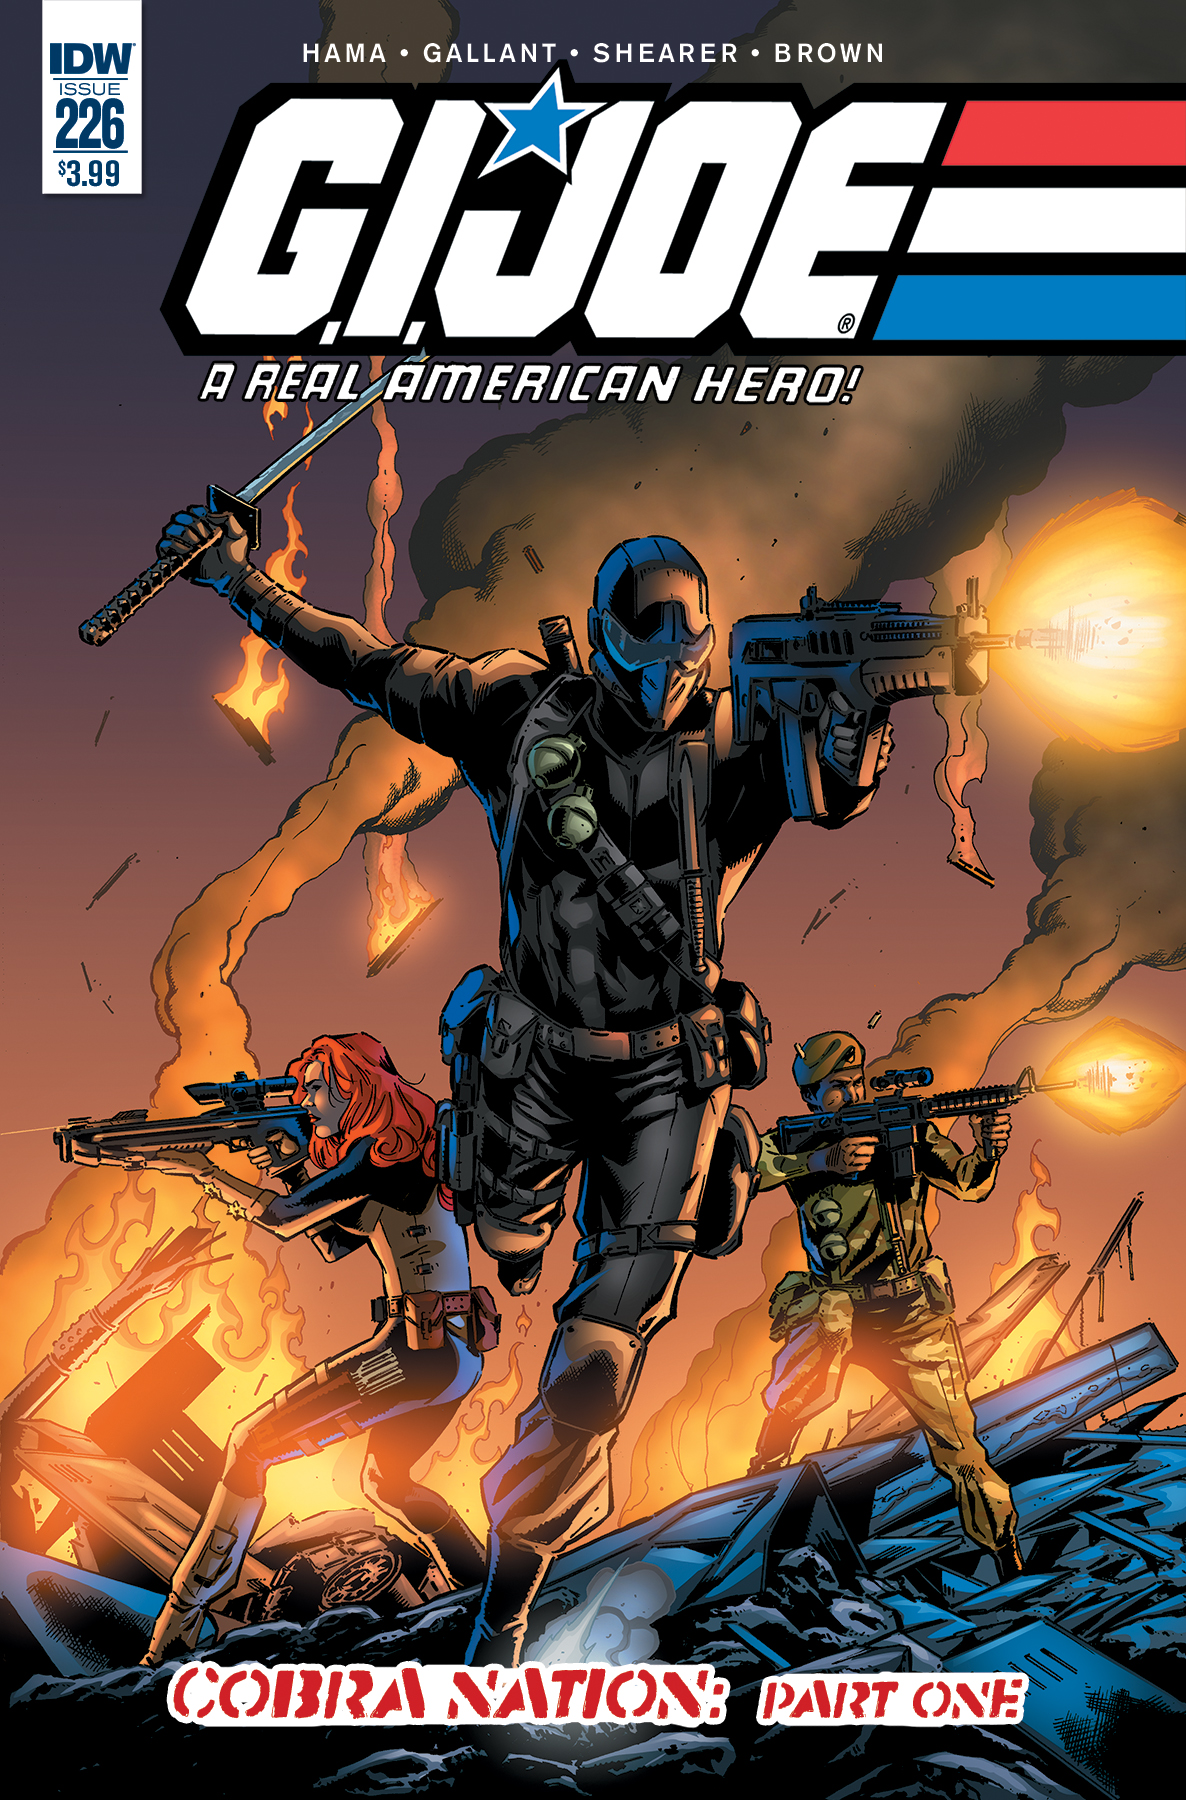 G.I. JOE: A Real American Hero #226: Cobra Nation, Part 1 Cover